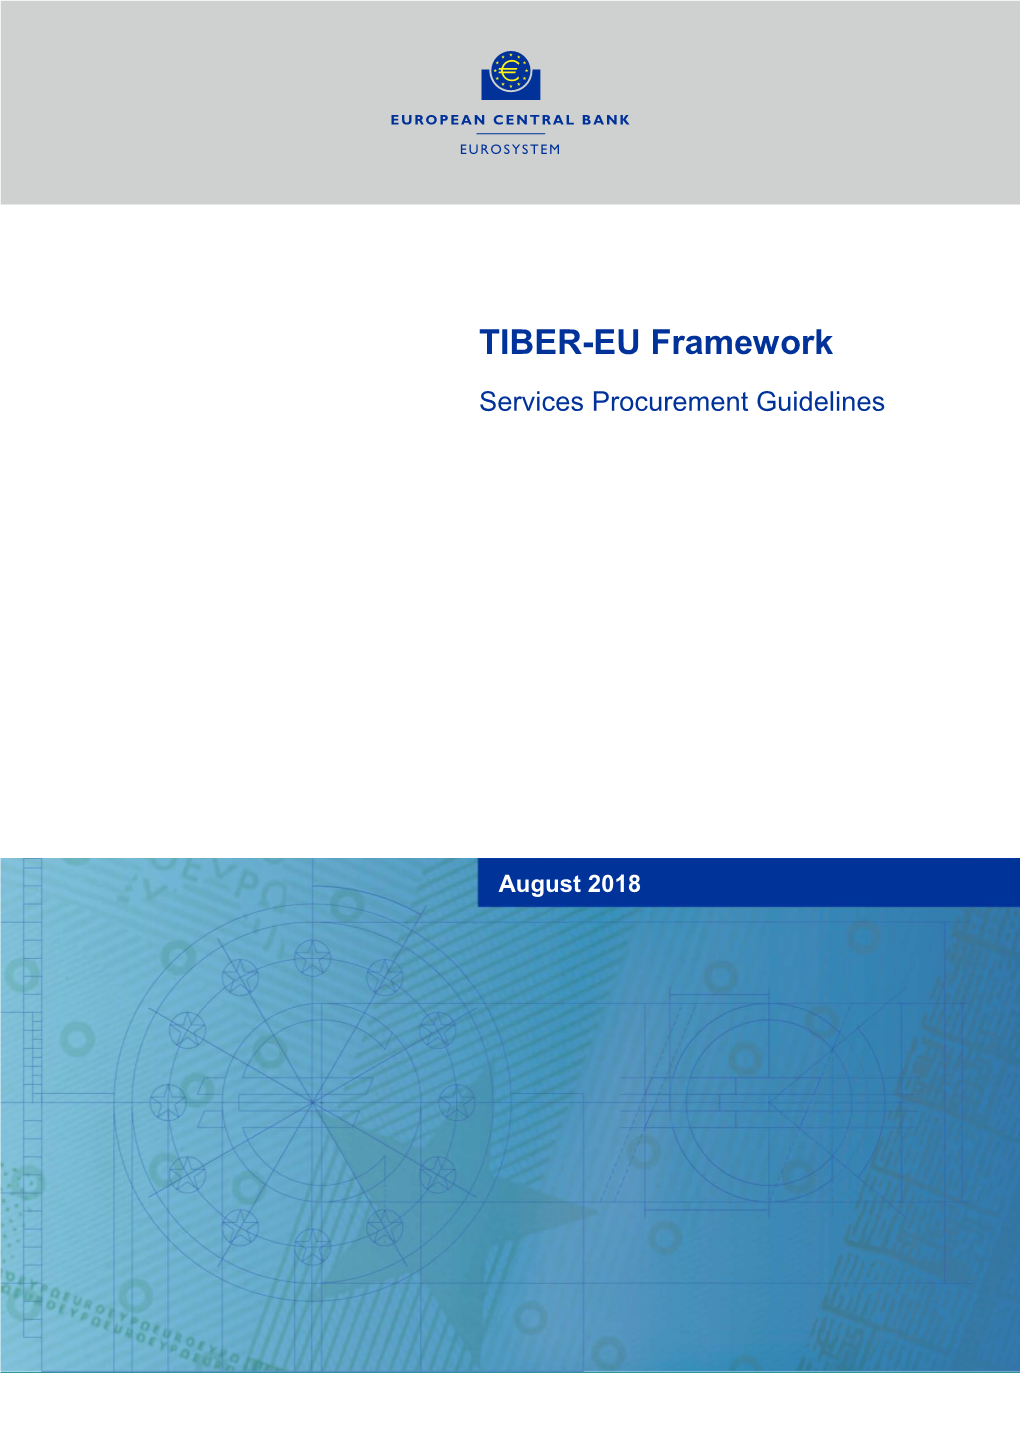 TIBER-EU Services Procurement Guidelines